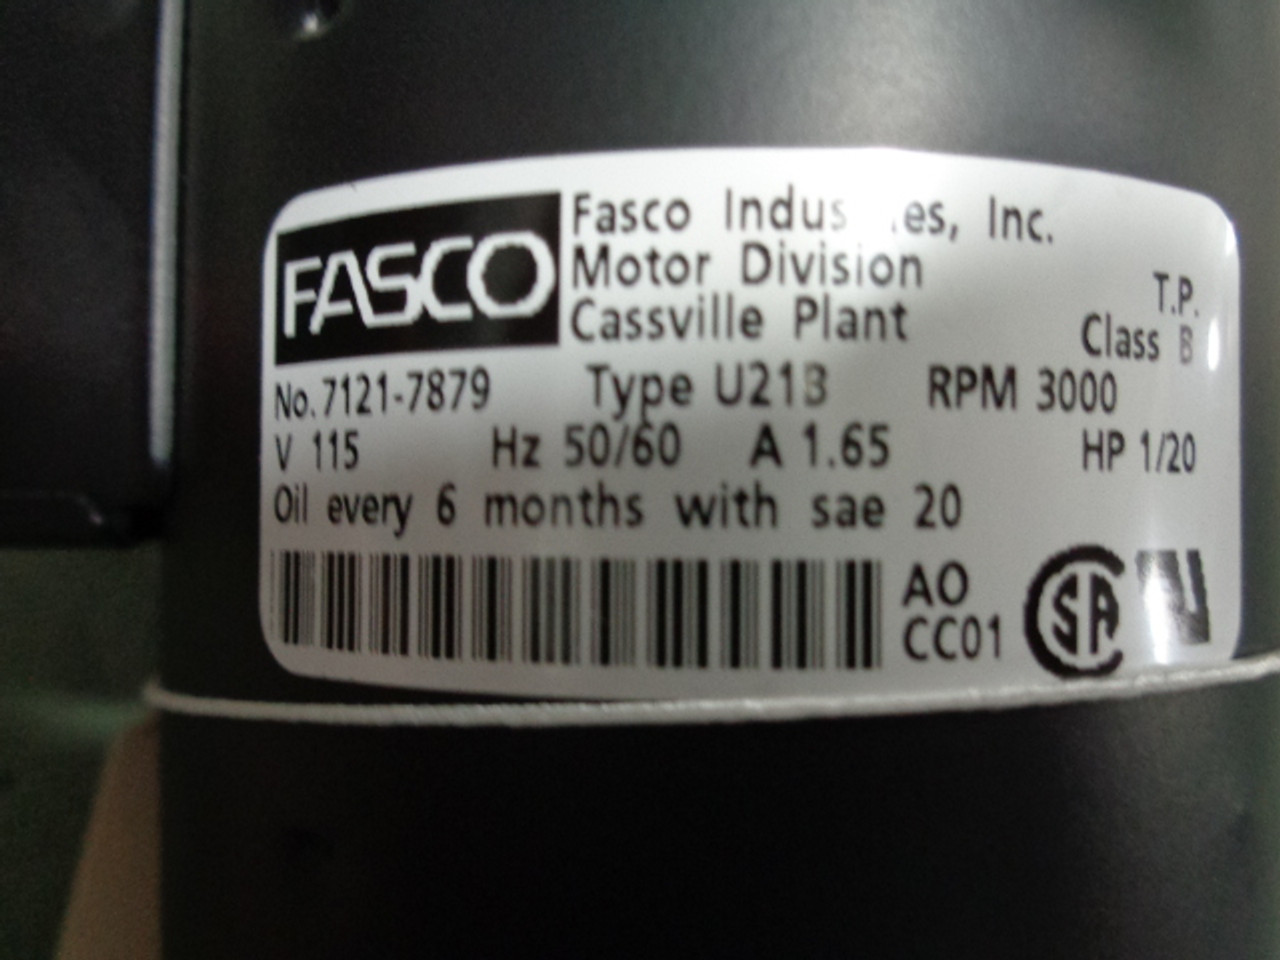 FASCO 7121-7879 Blower Motor - 115 Volts AC, RPM 3000, HP 1/201